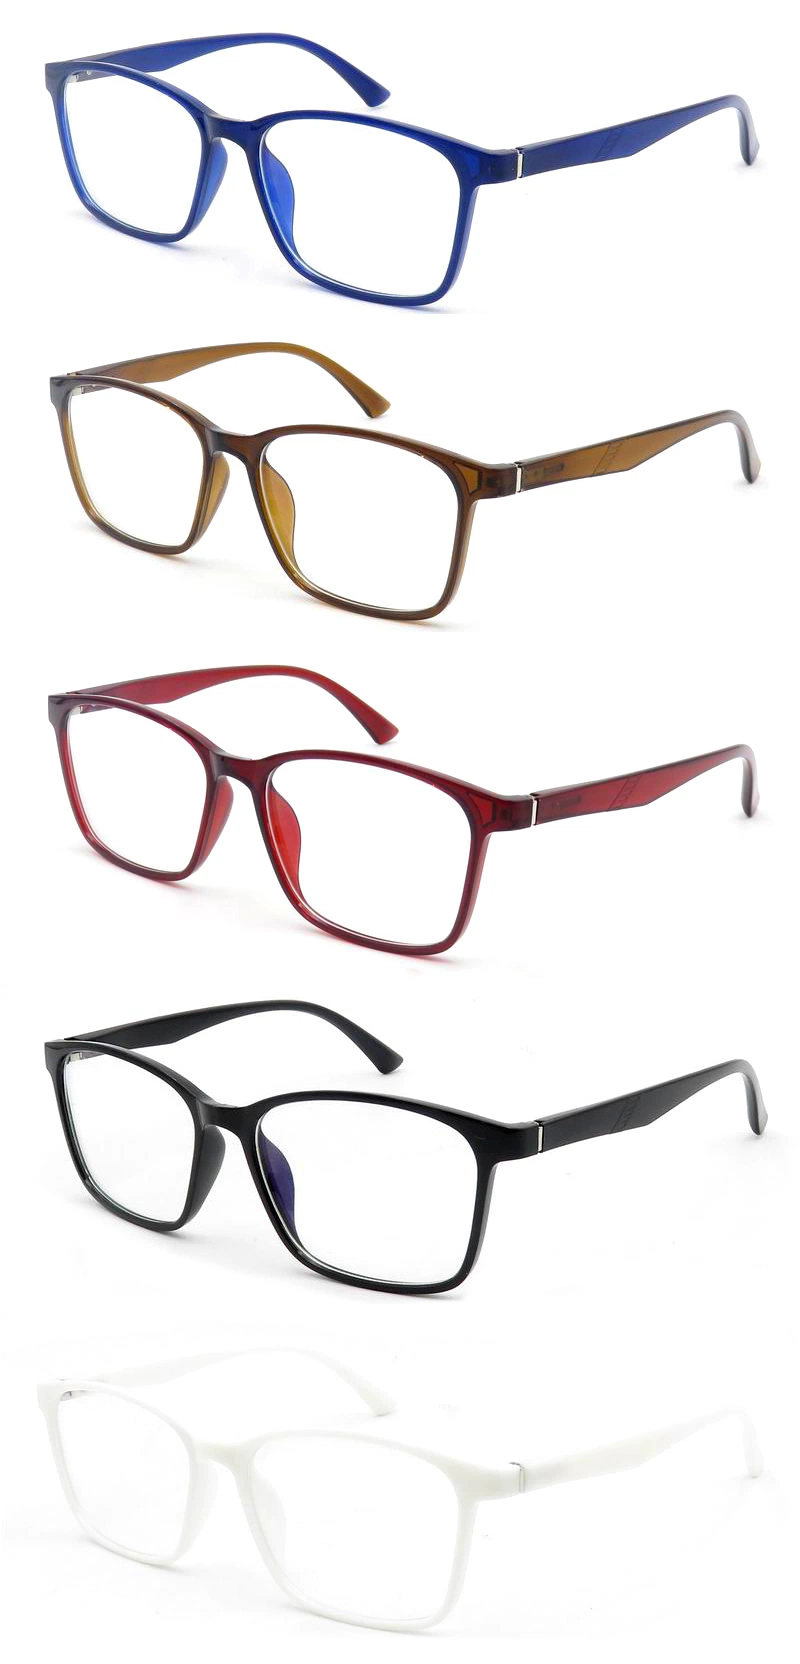 Ready Stock Cheap Price Tr90 Eyeglass Frame Optical Glasses Eyewear Frames